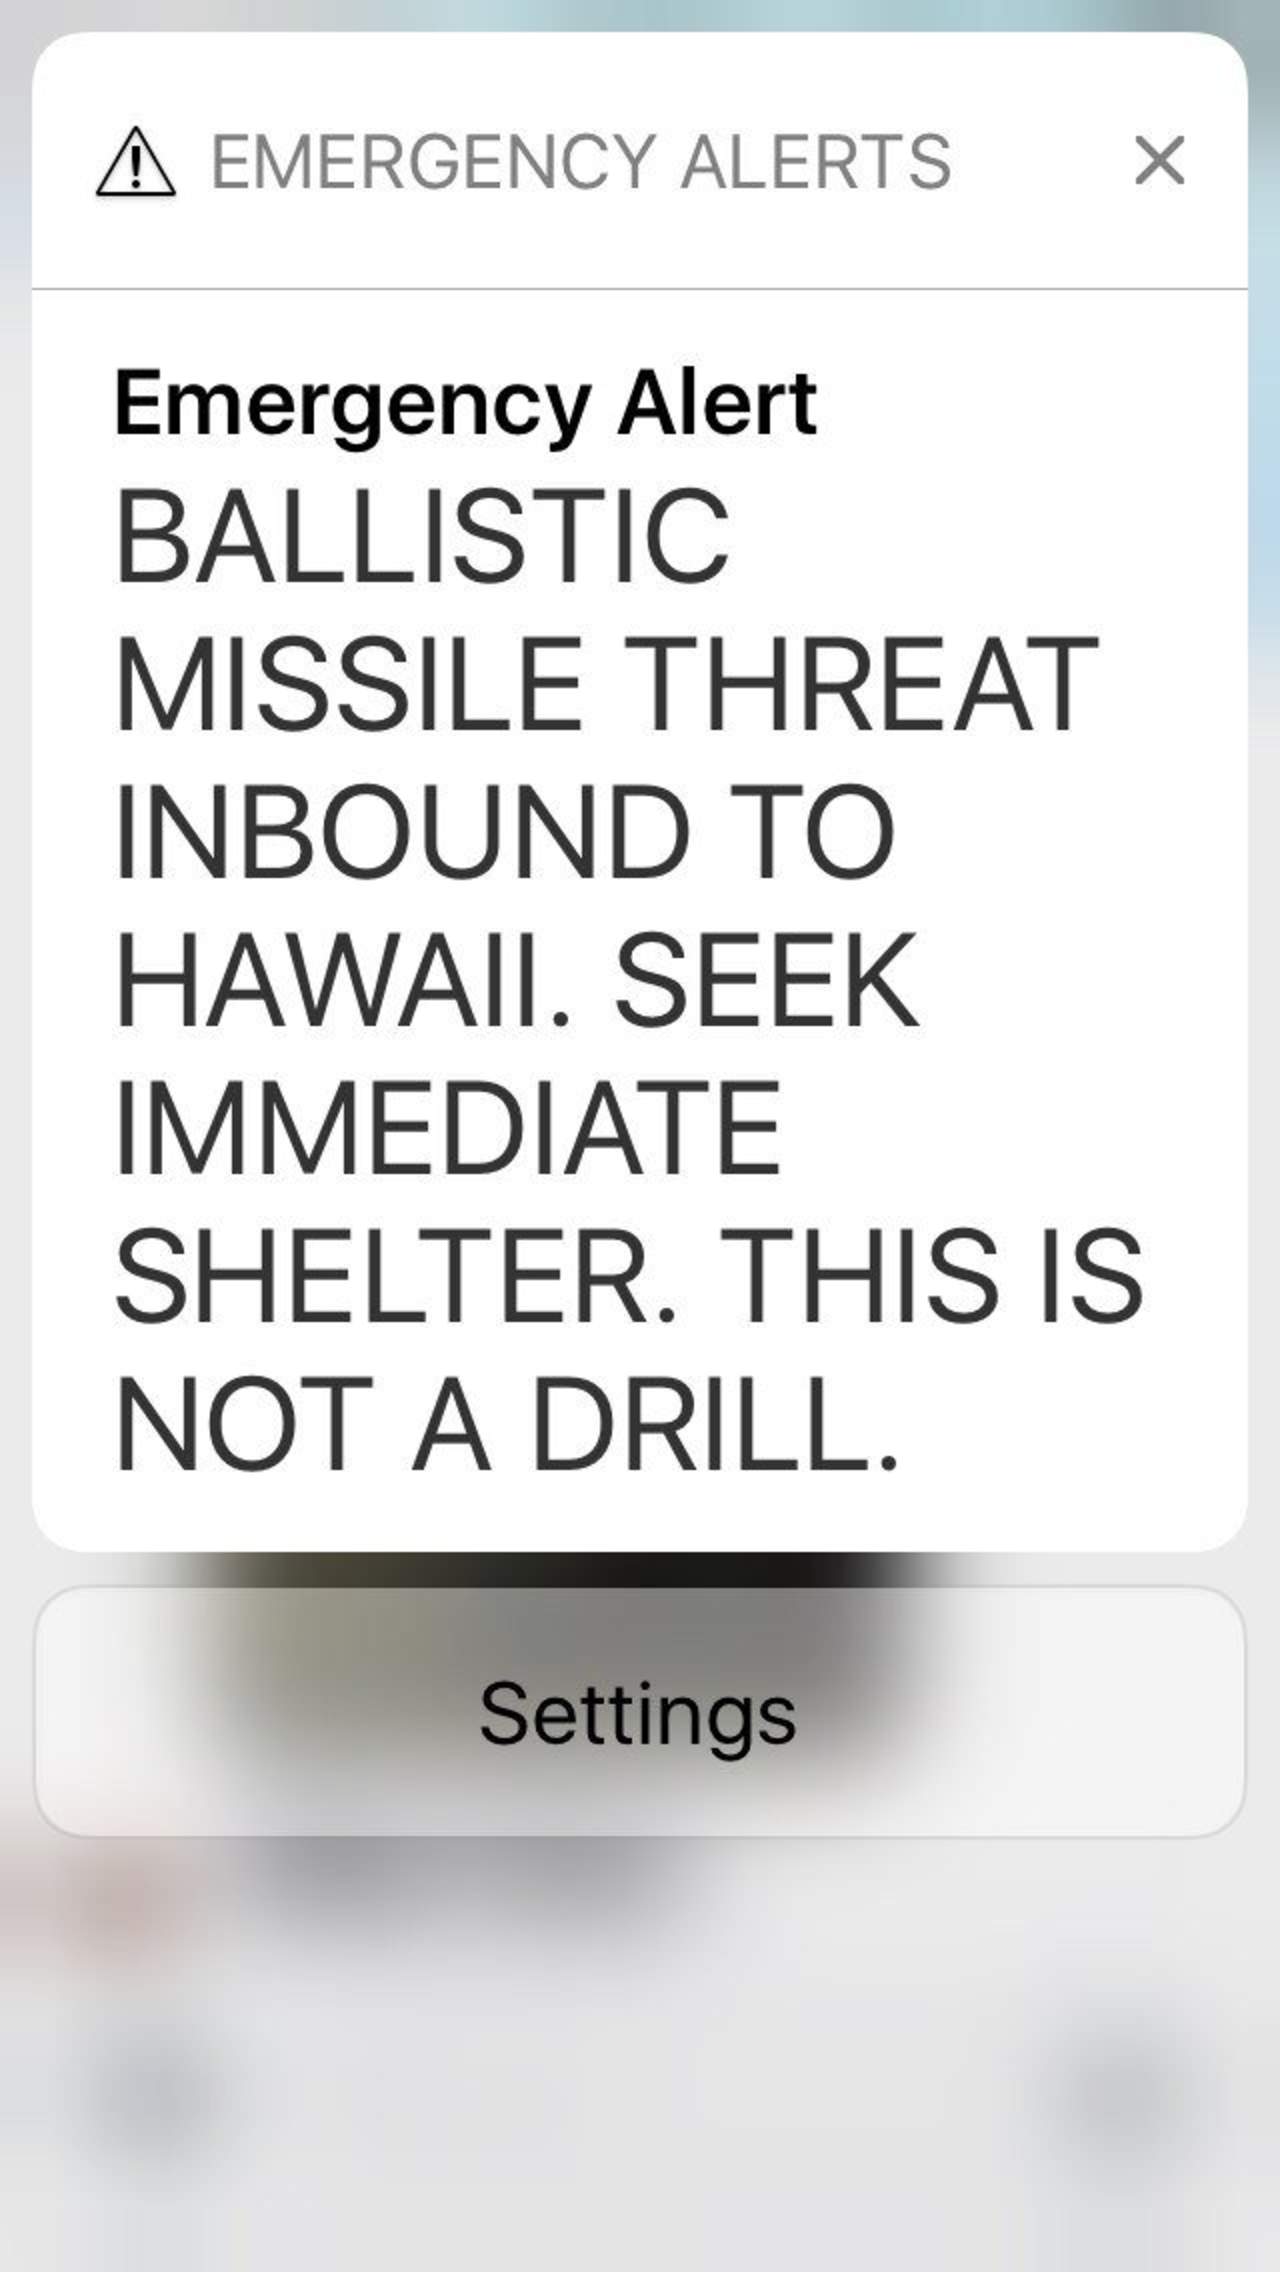 Viven 40 minutos de pánico en Hawái 